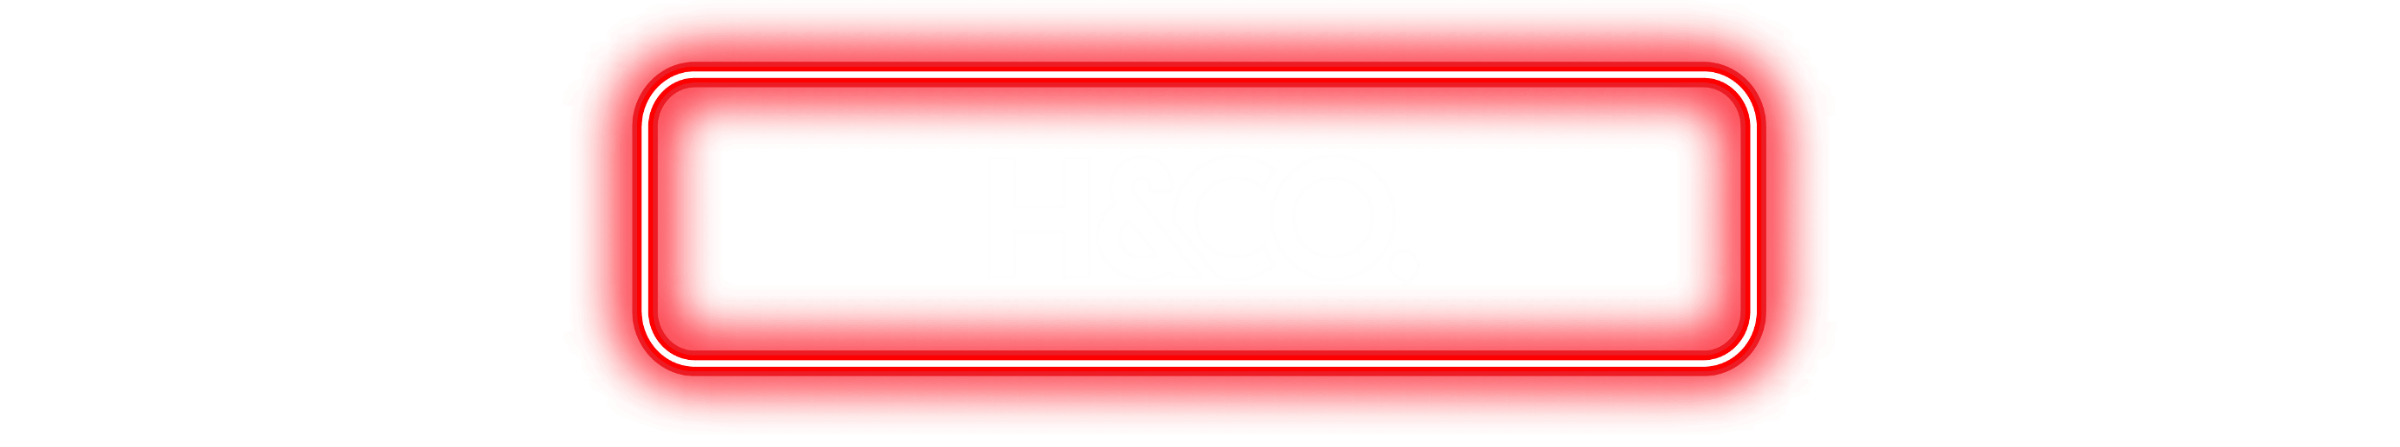 H&CO